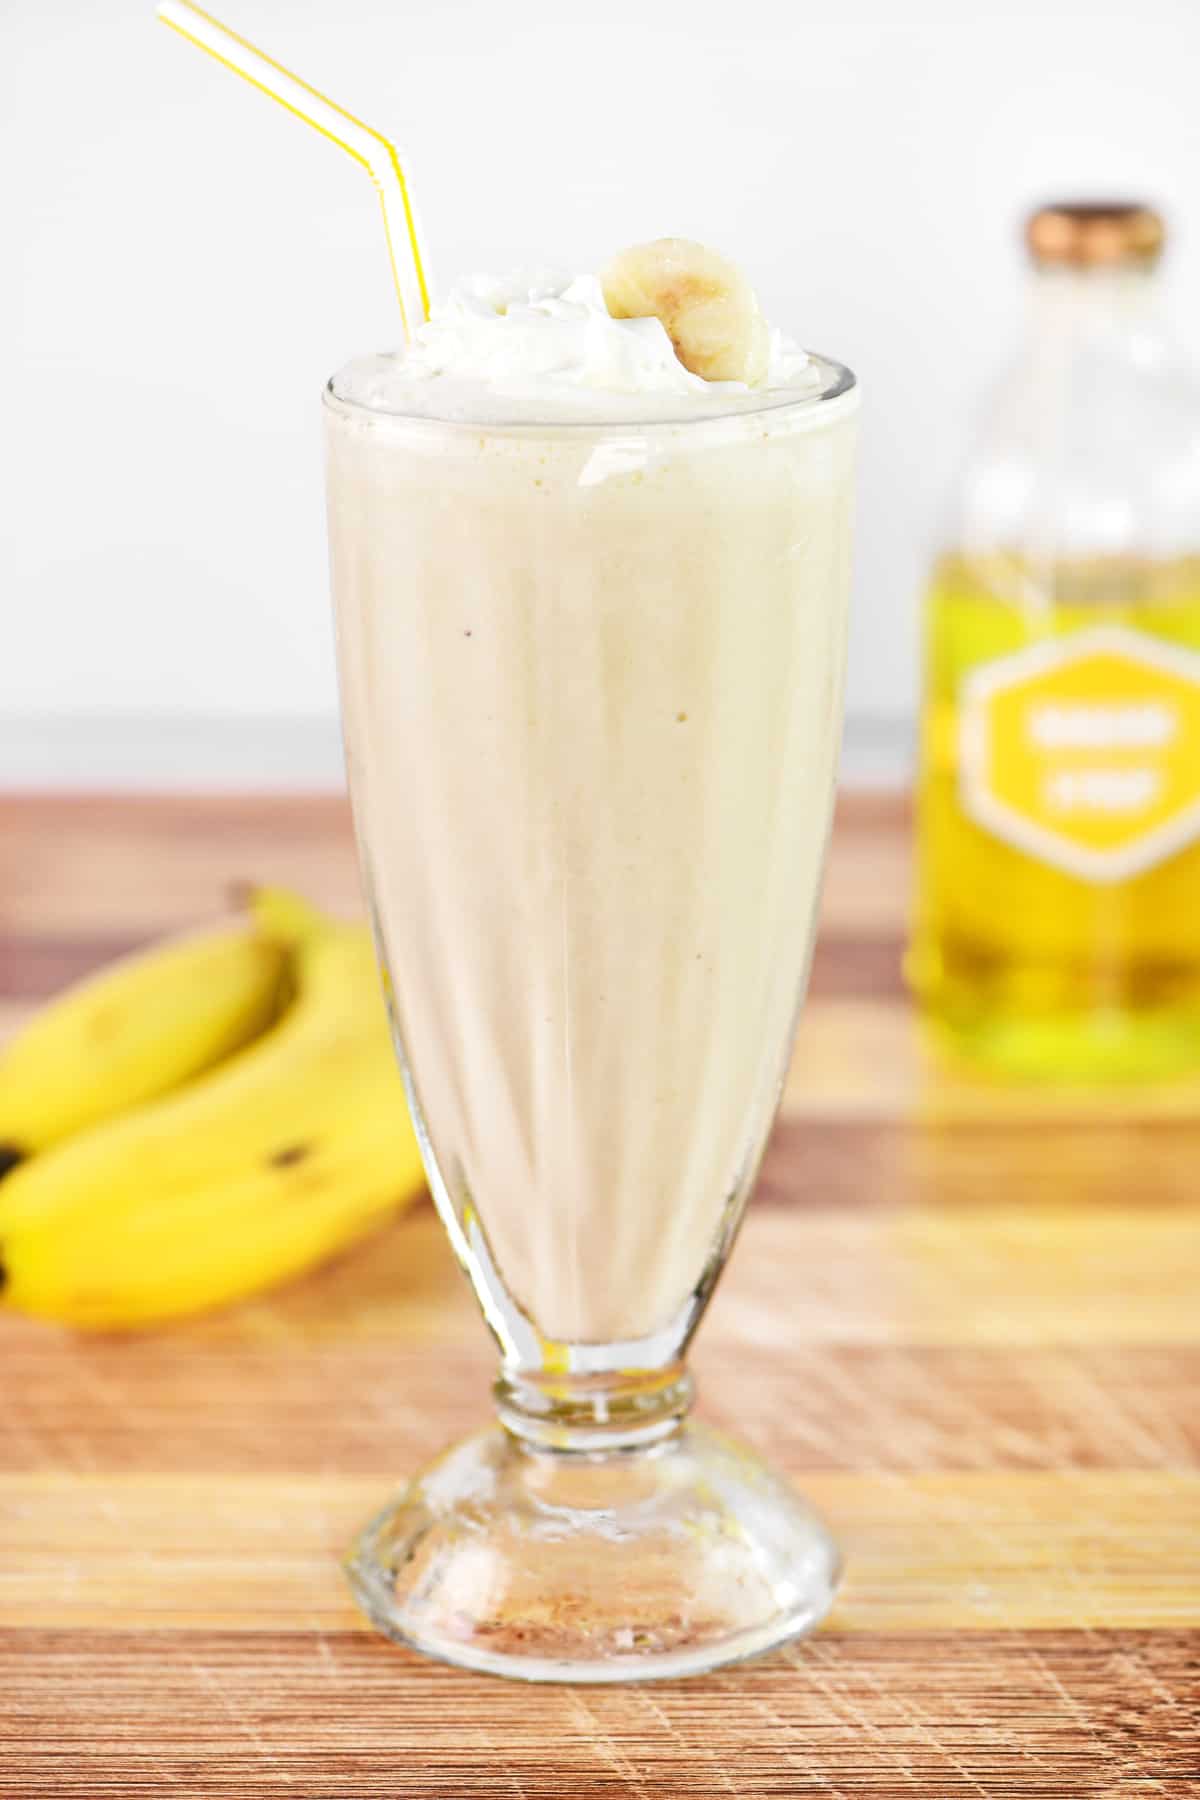 Banana milkshake in a glass.